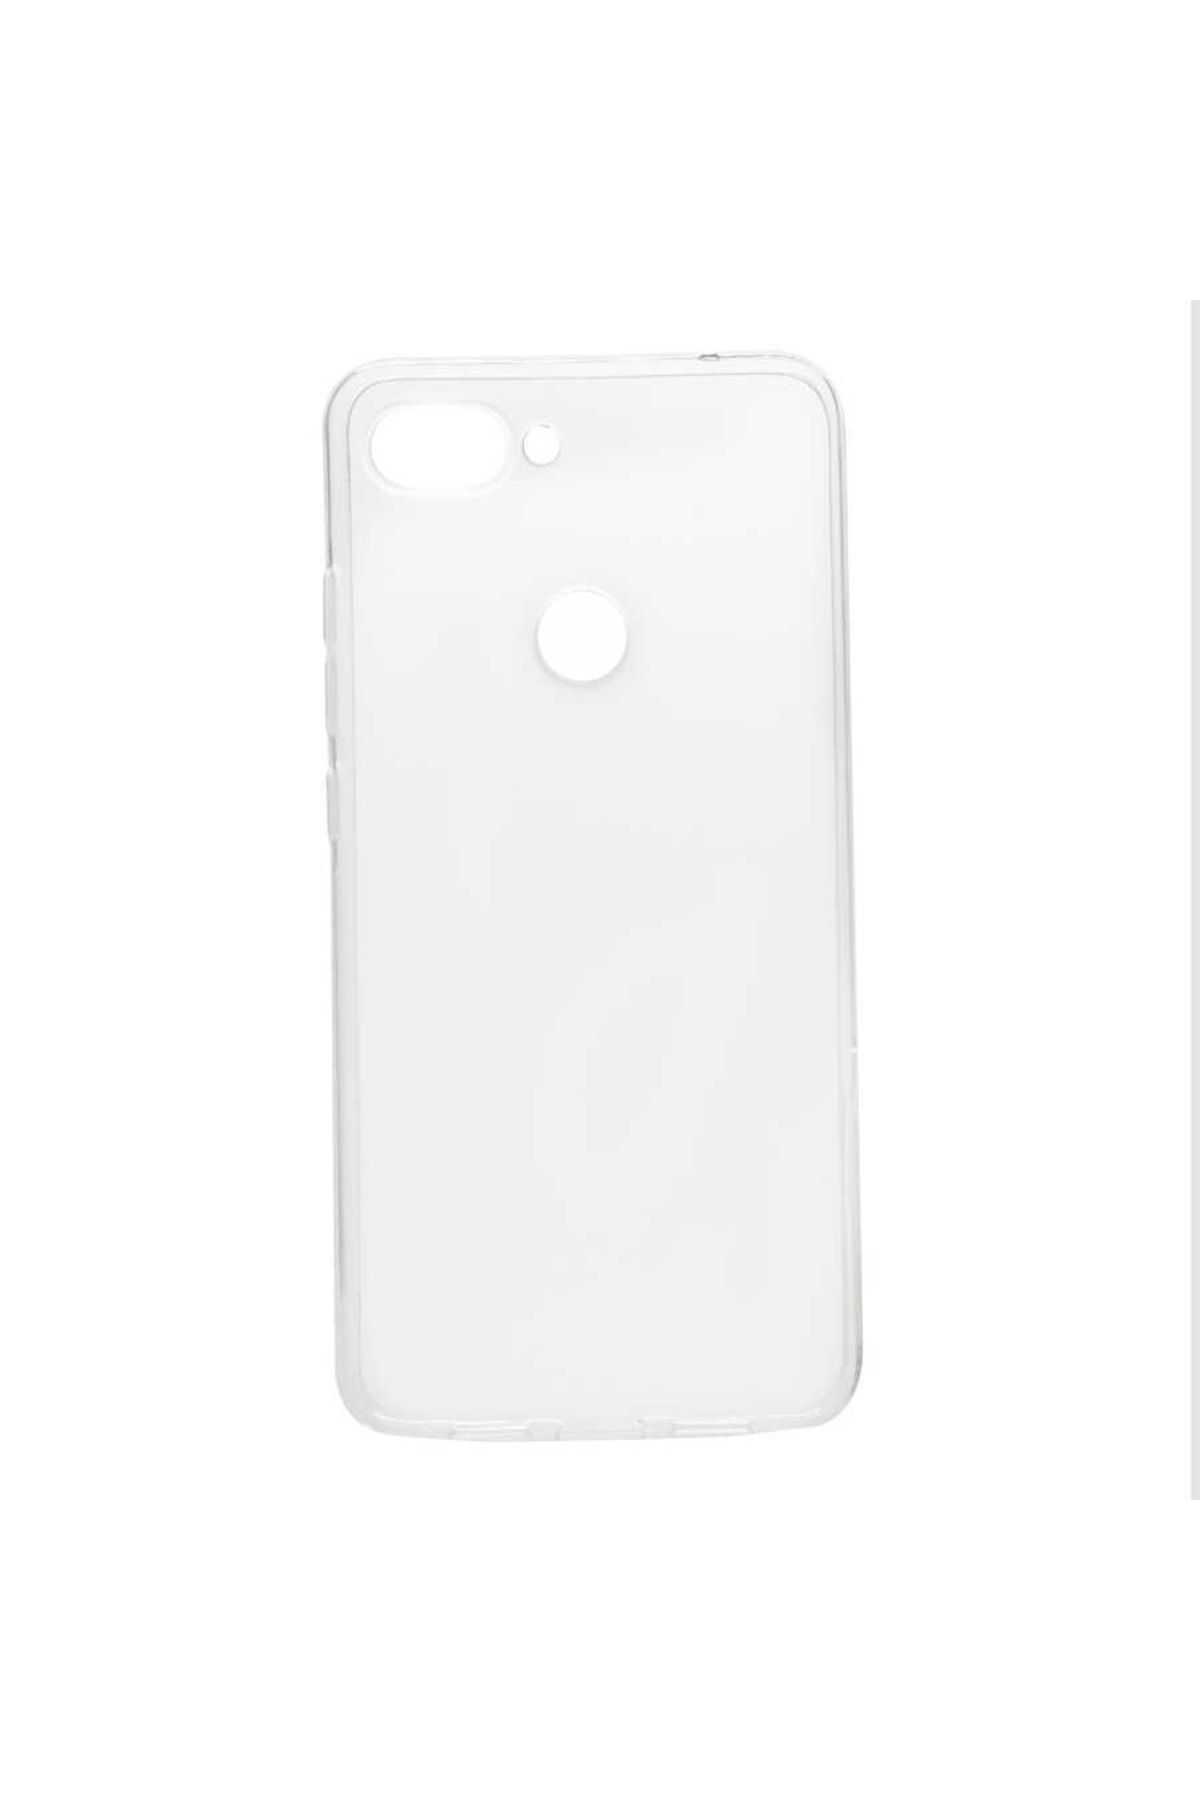 wuuw Xiaomi Mi 8 Lite Uyumlu Kılıf A++ Kalite Tamamen Şeffaf Tam Koruma Kapak Kılıf